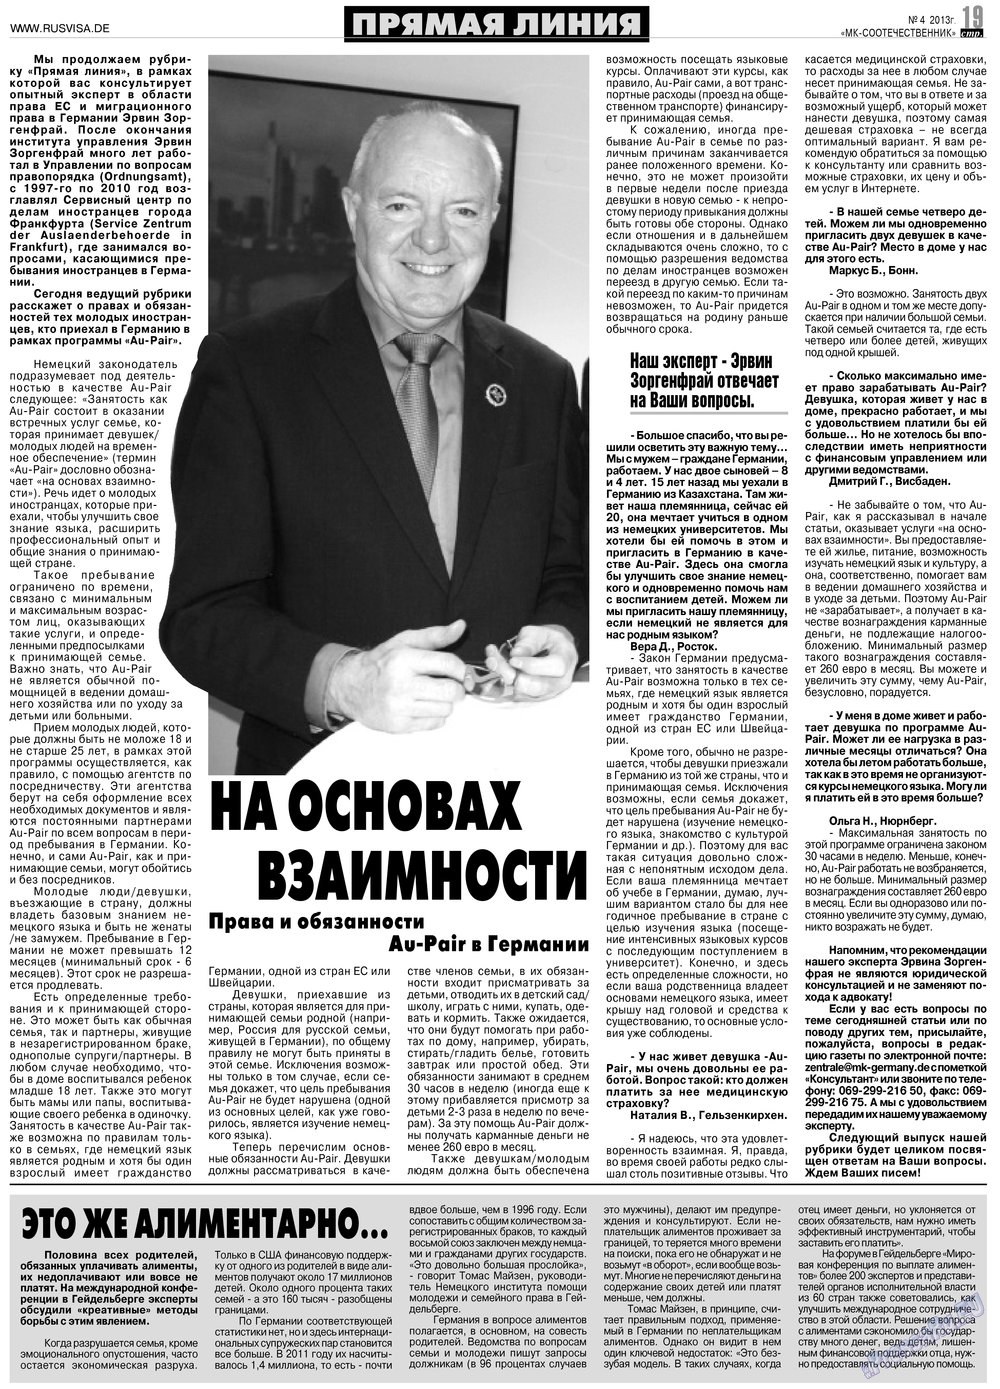 МК-Германия планета мнений, газета. 2013 №4 стр.19